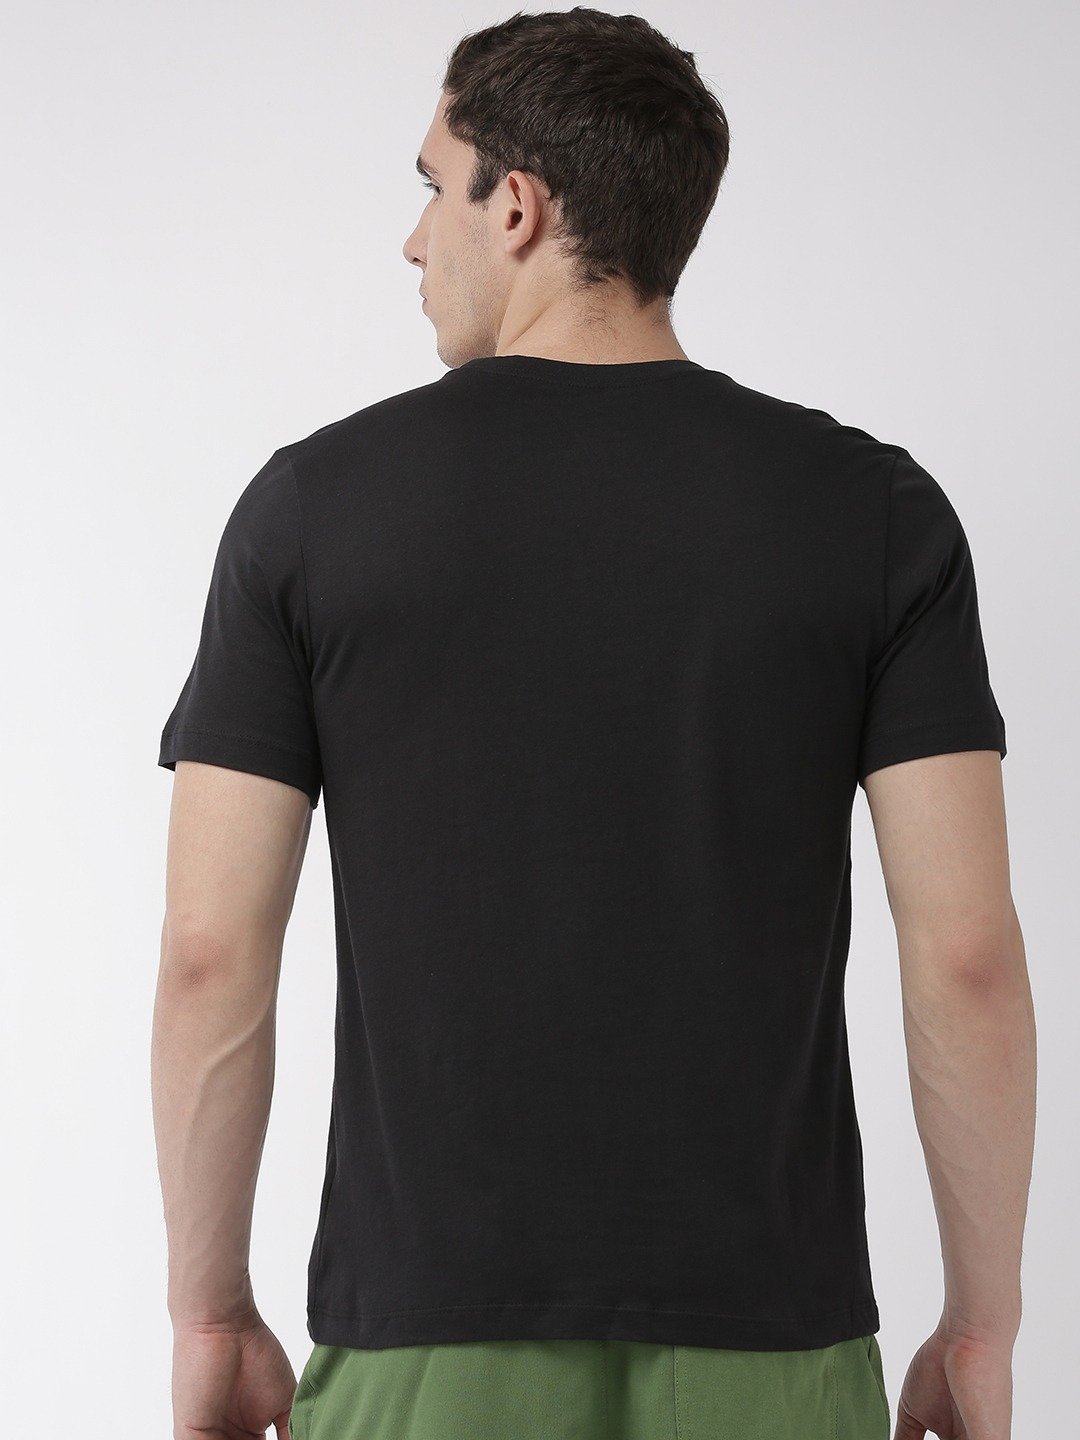 Men Black Printed Round Neck NSW JDI BUMPER T-shirt - Discount Store